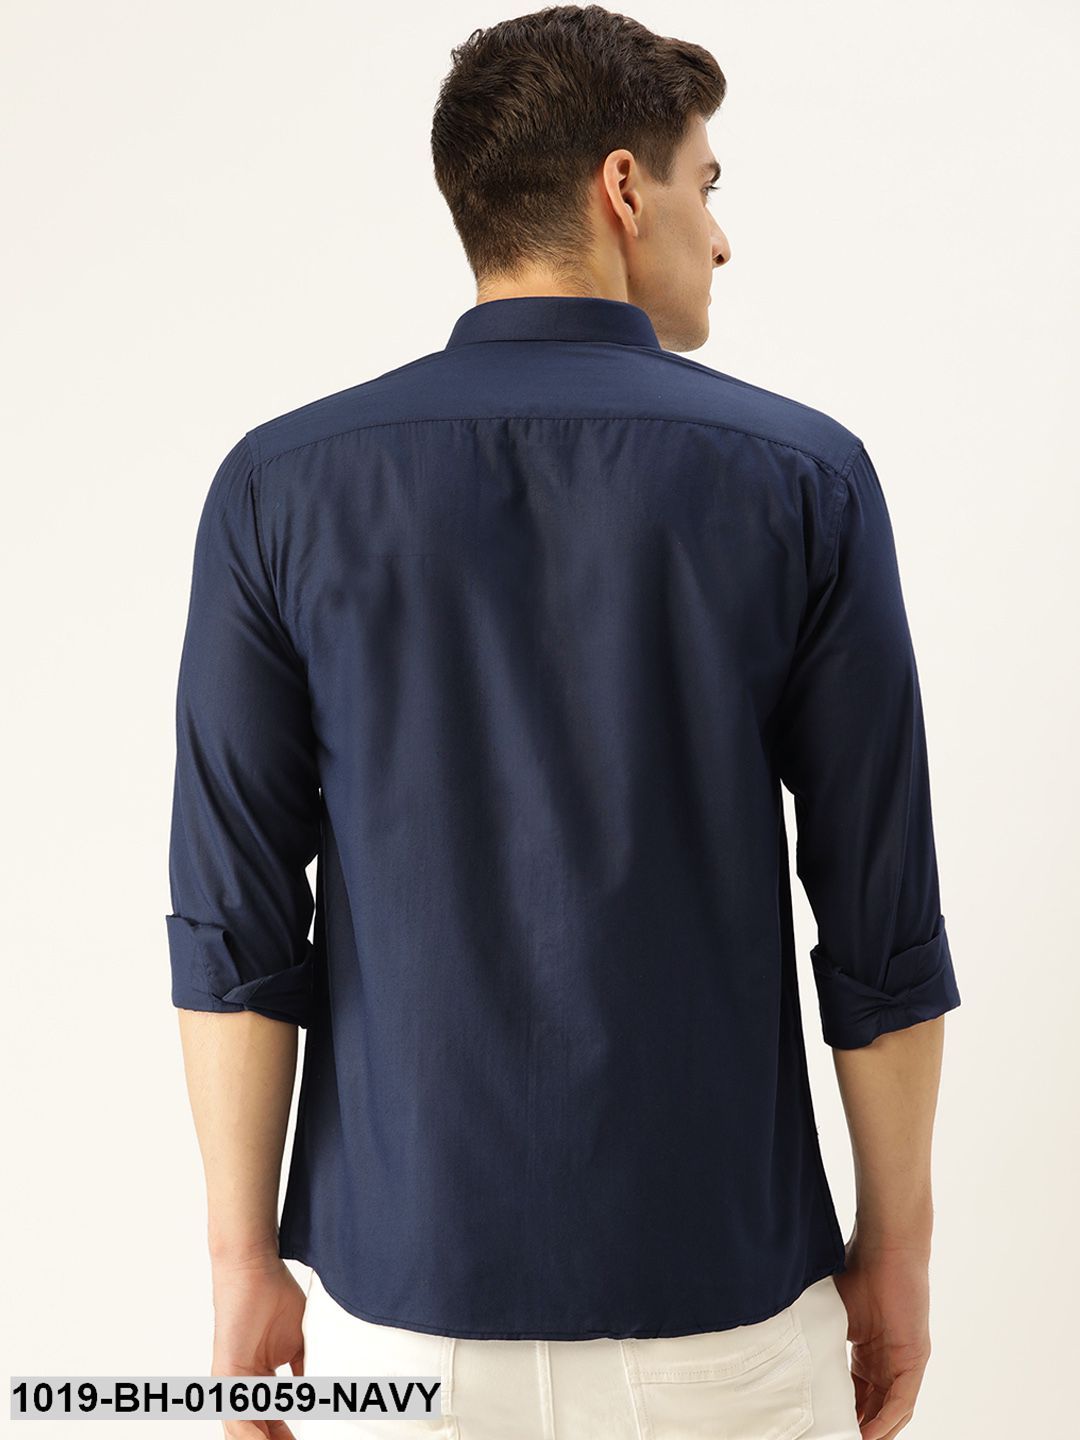 Men's Cotton Navy Blue Casual Shirt - Sojanya